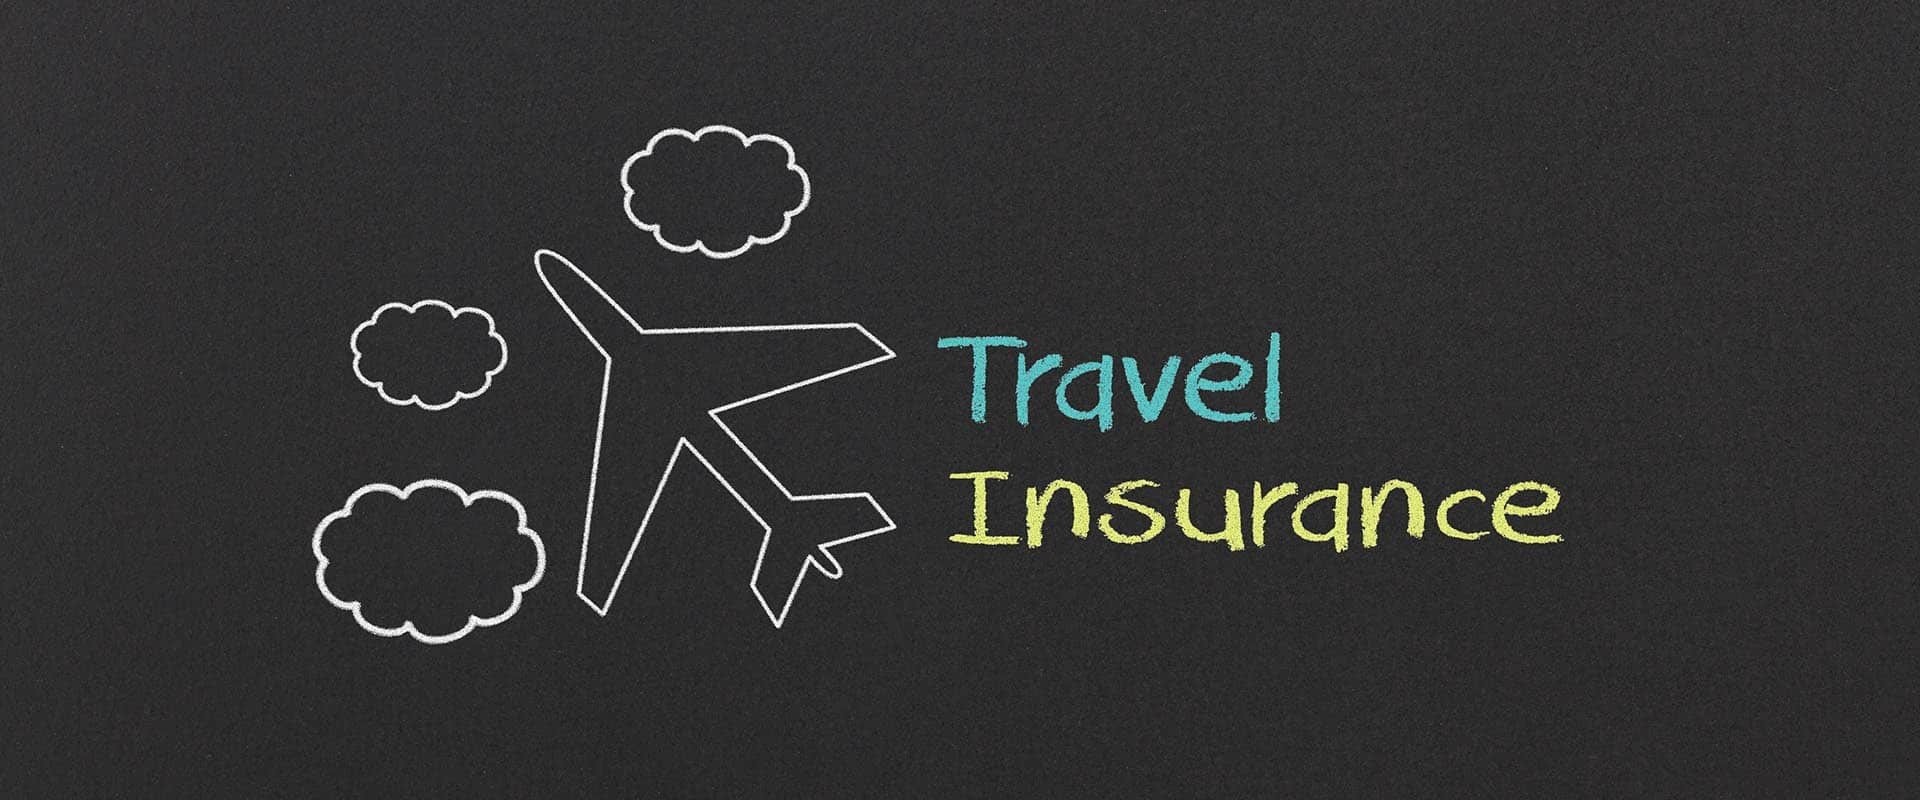 lg travel insurance